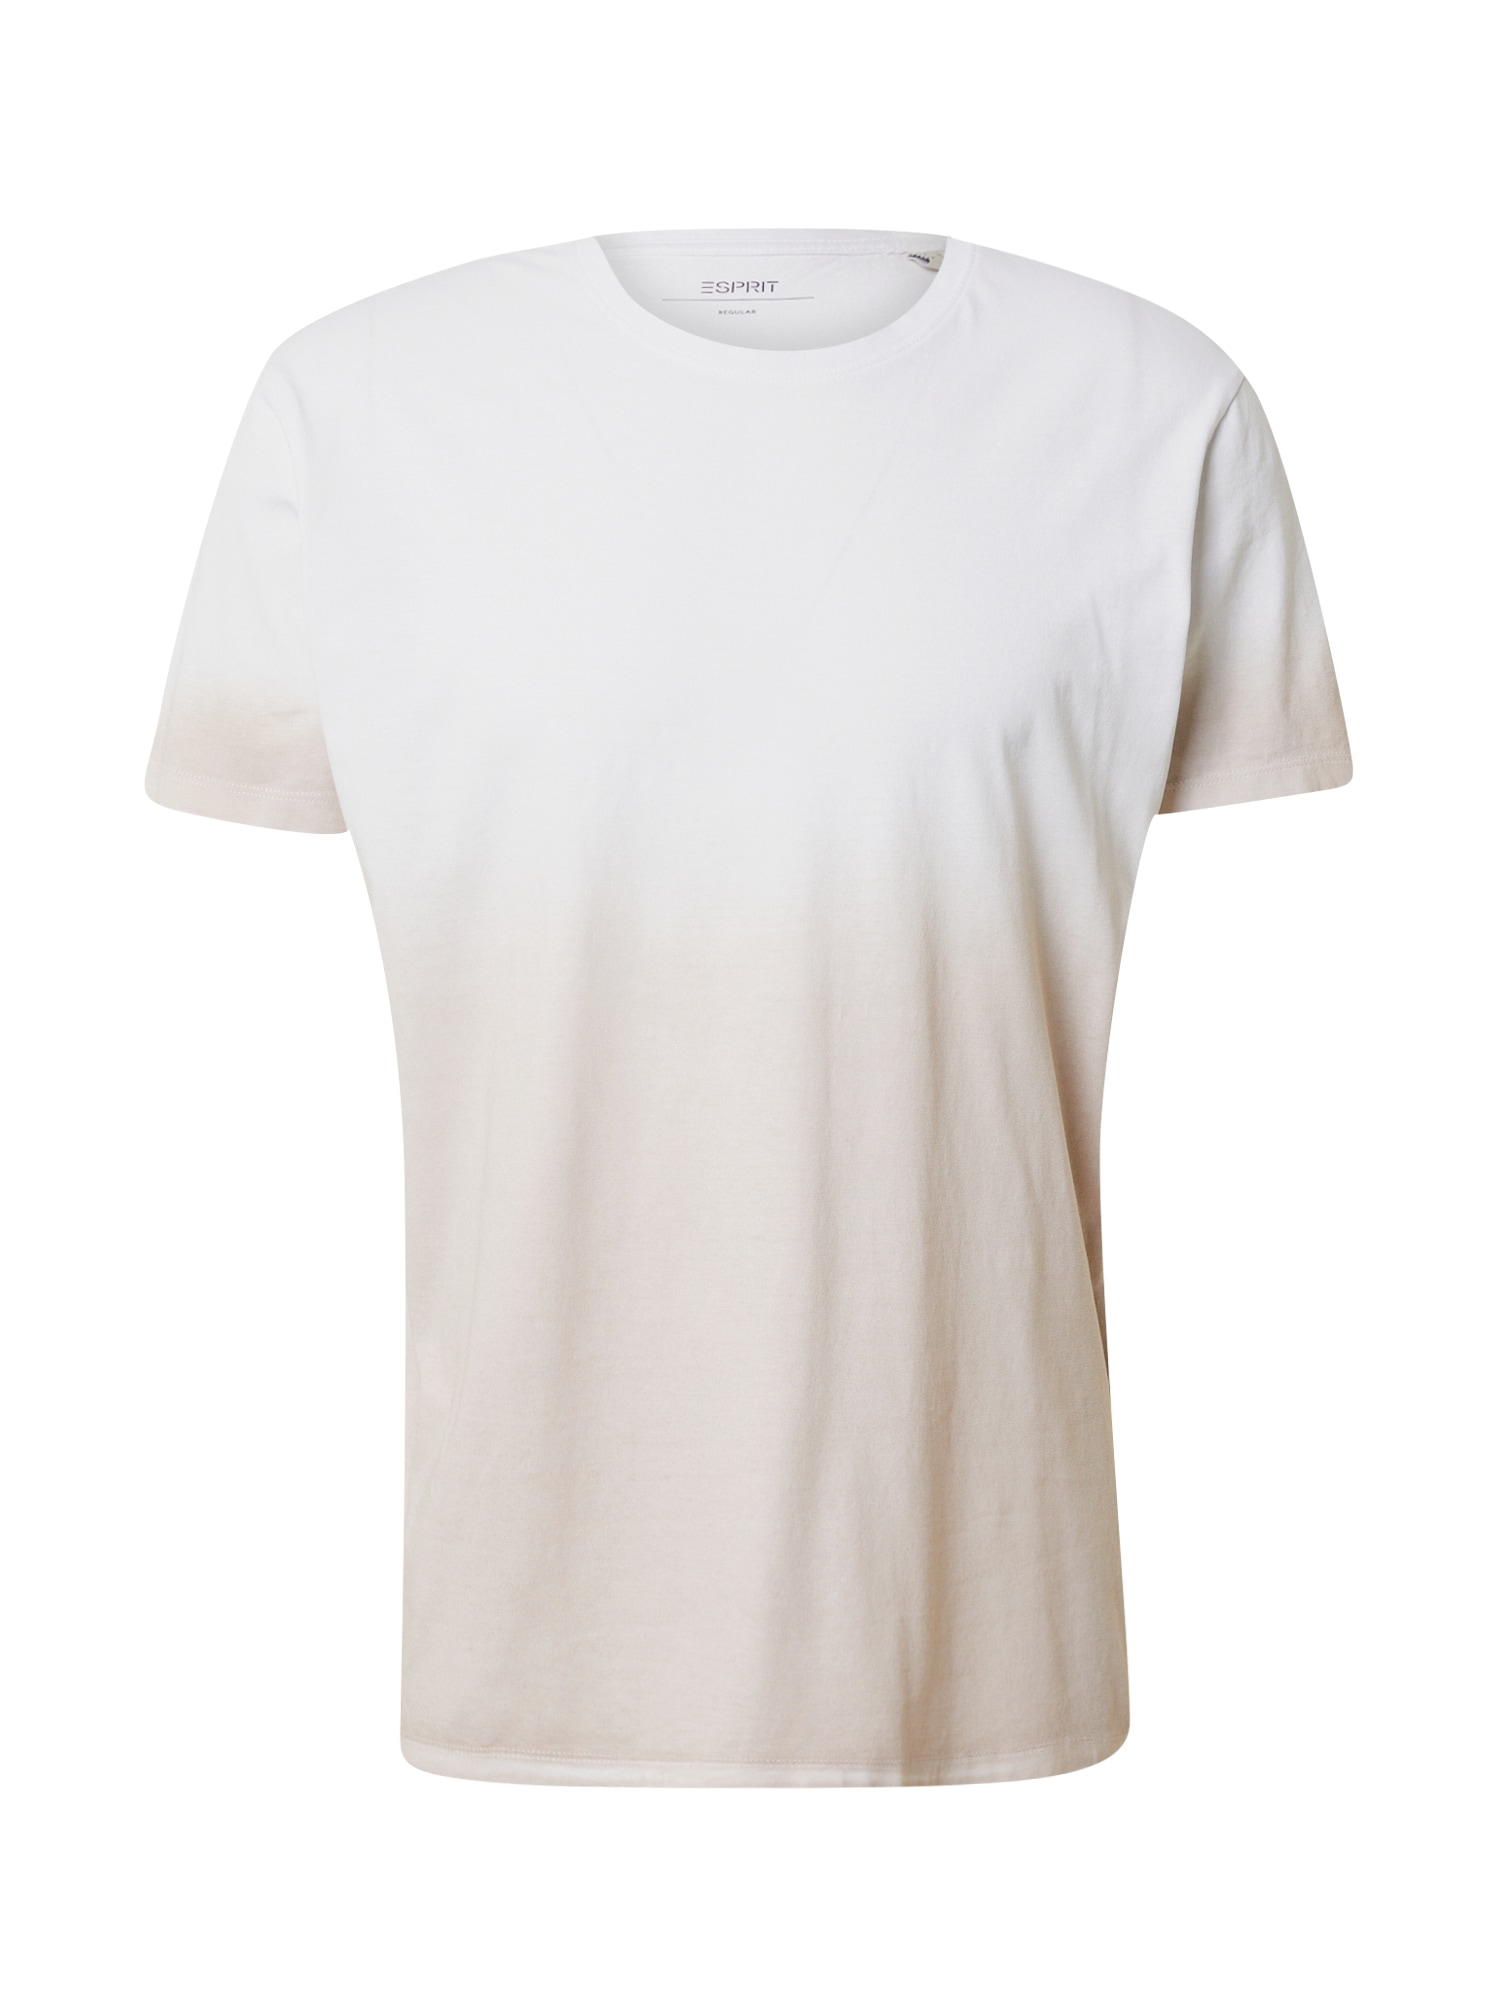 ESPRIT Тениска  светлобежово / бяло